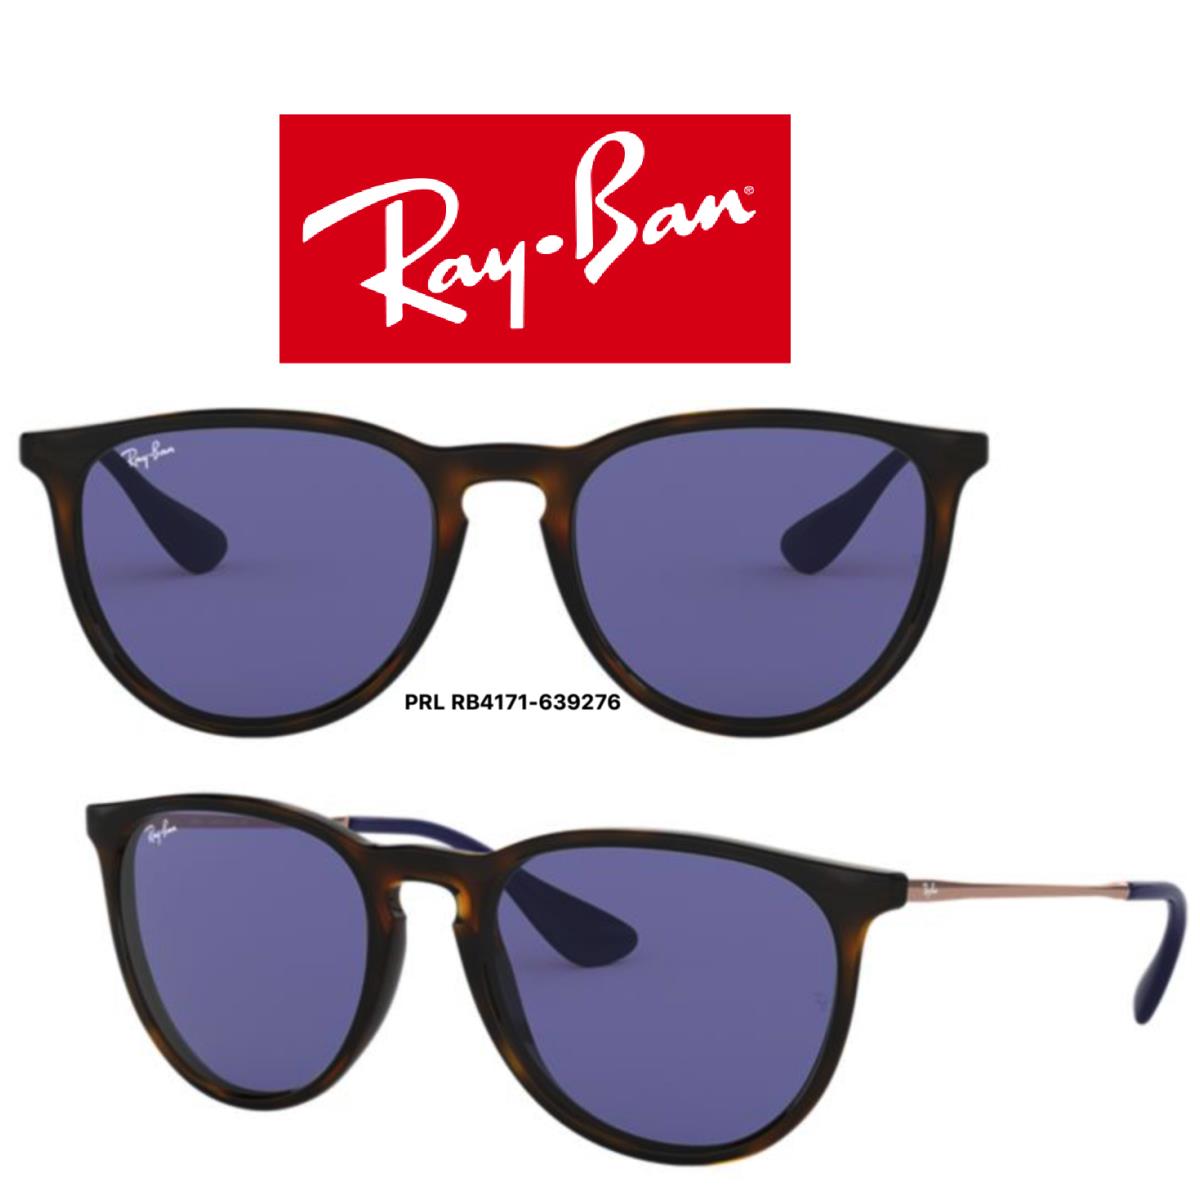 Ray-ban Ray Ban Sunglasses RB4171 Erika - Multiple Colors RB4171 639276